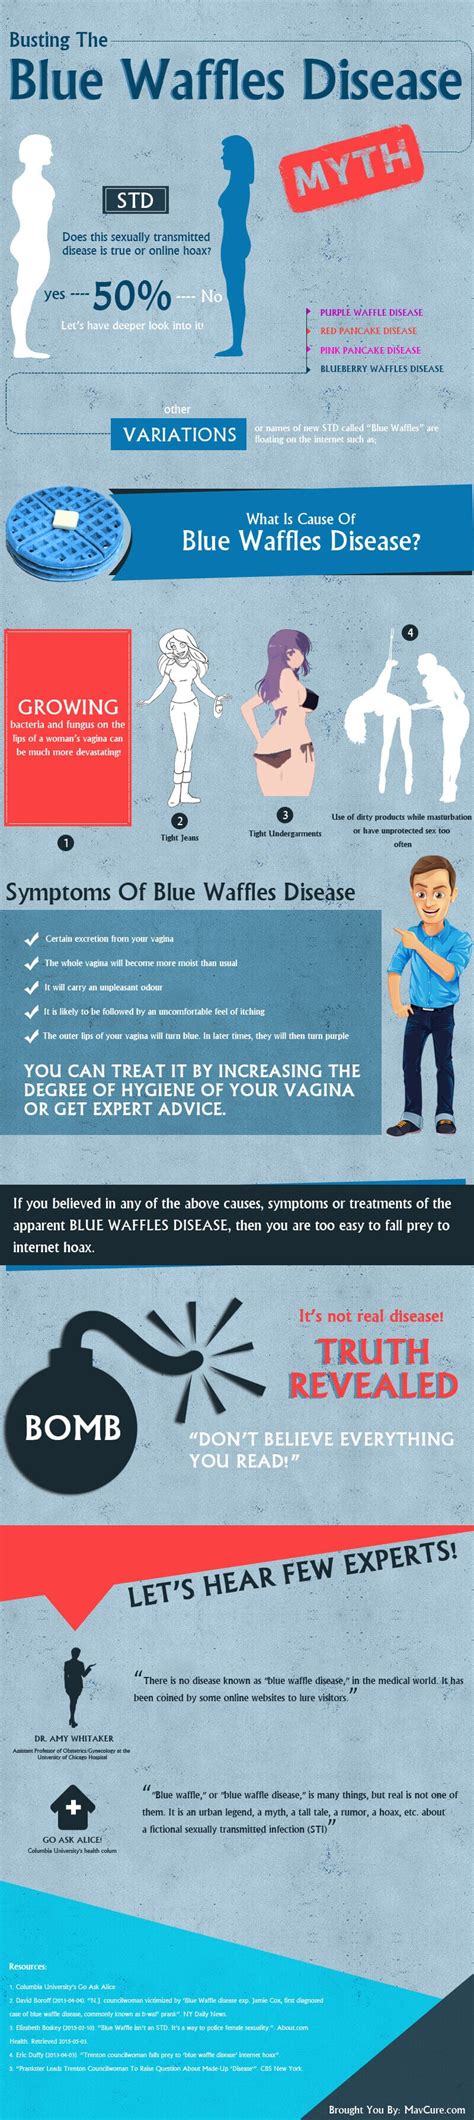 Busting The Blue Waffles Disease Myth